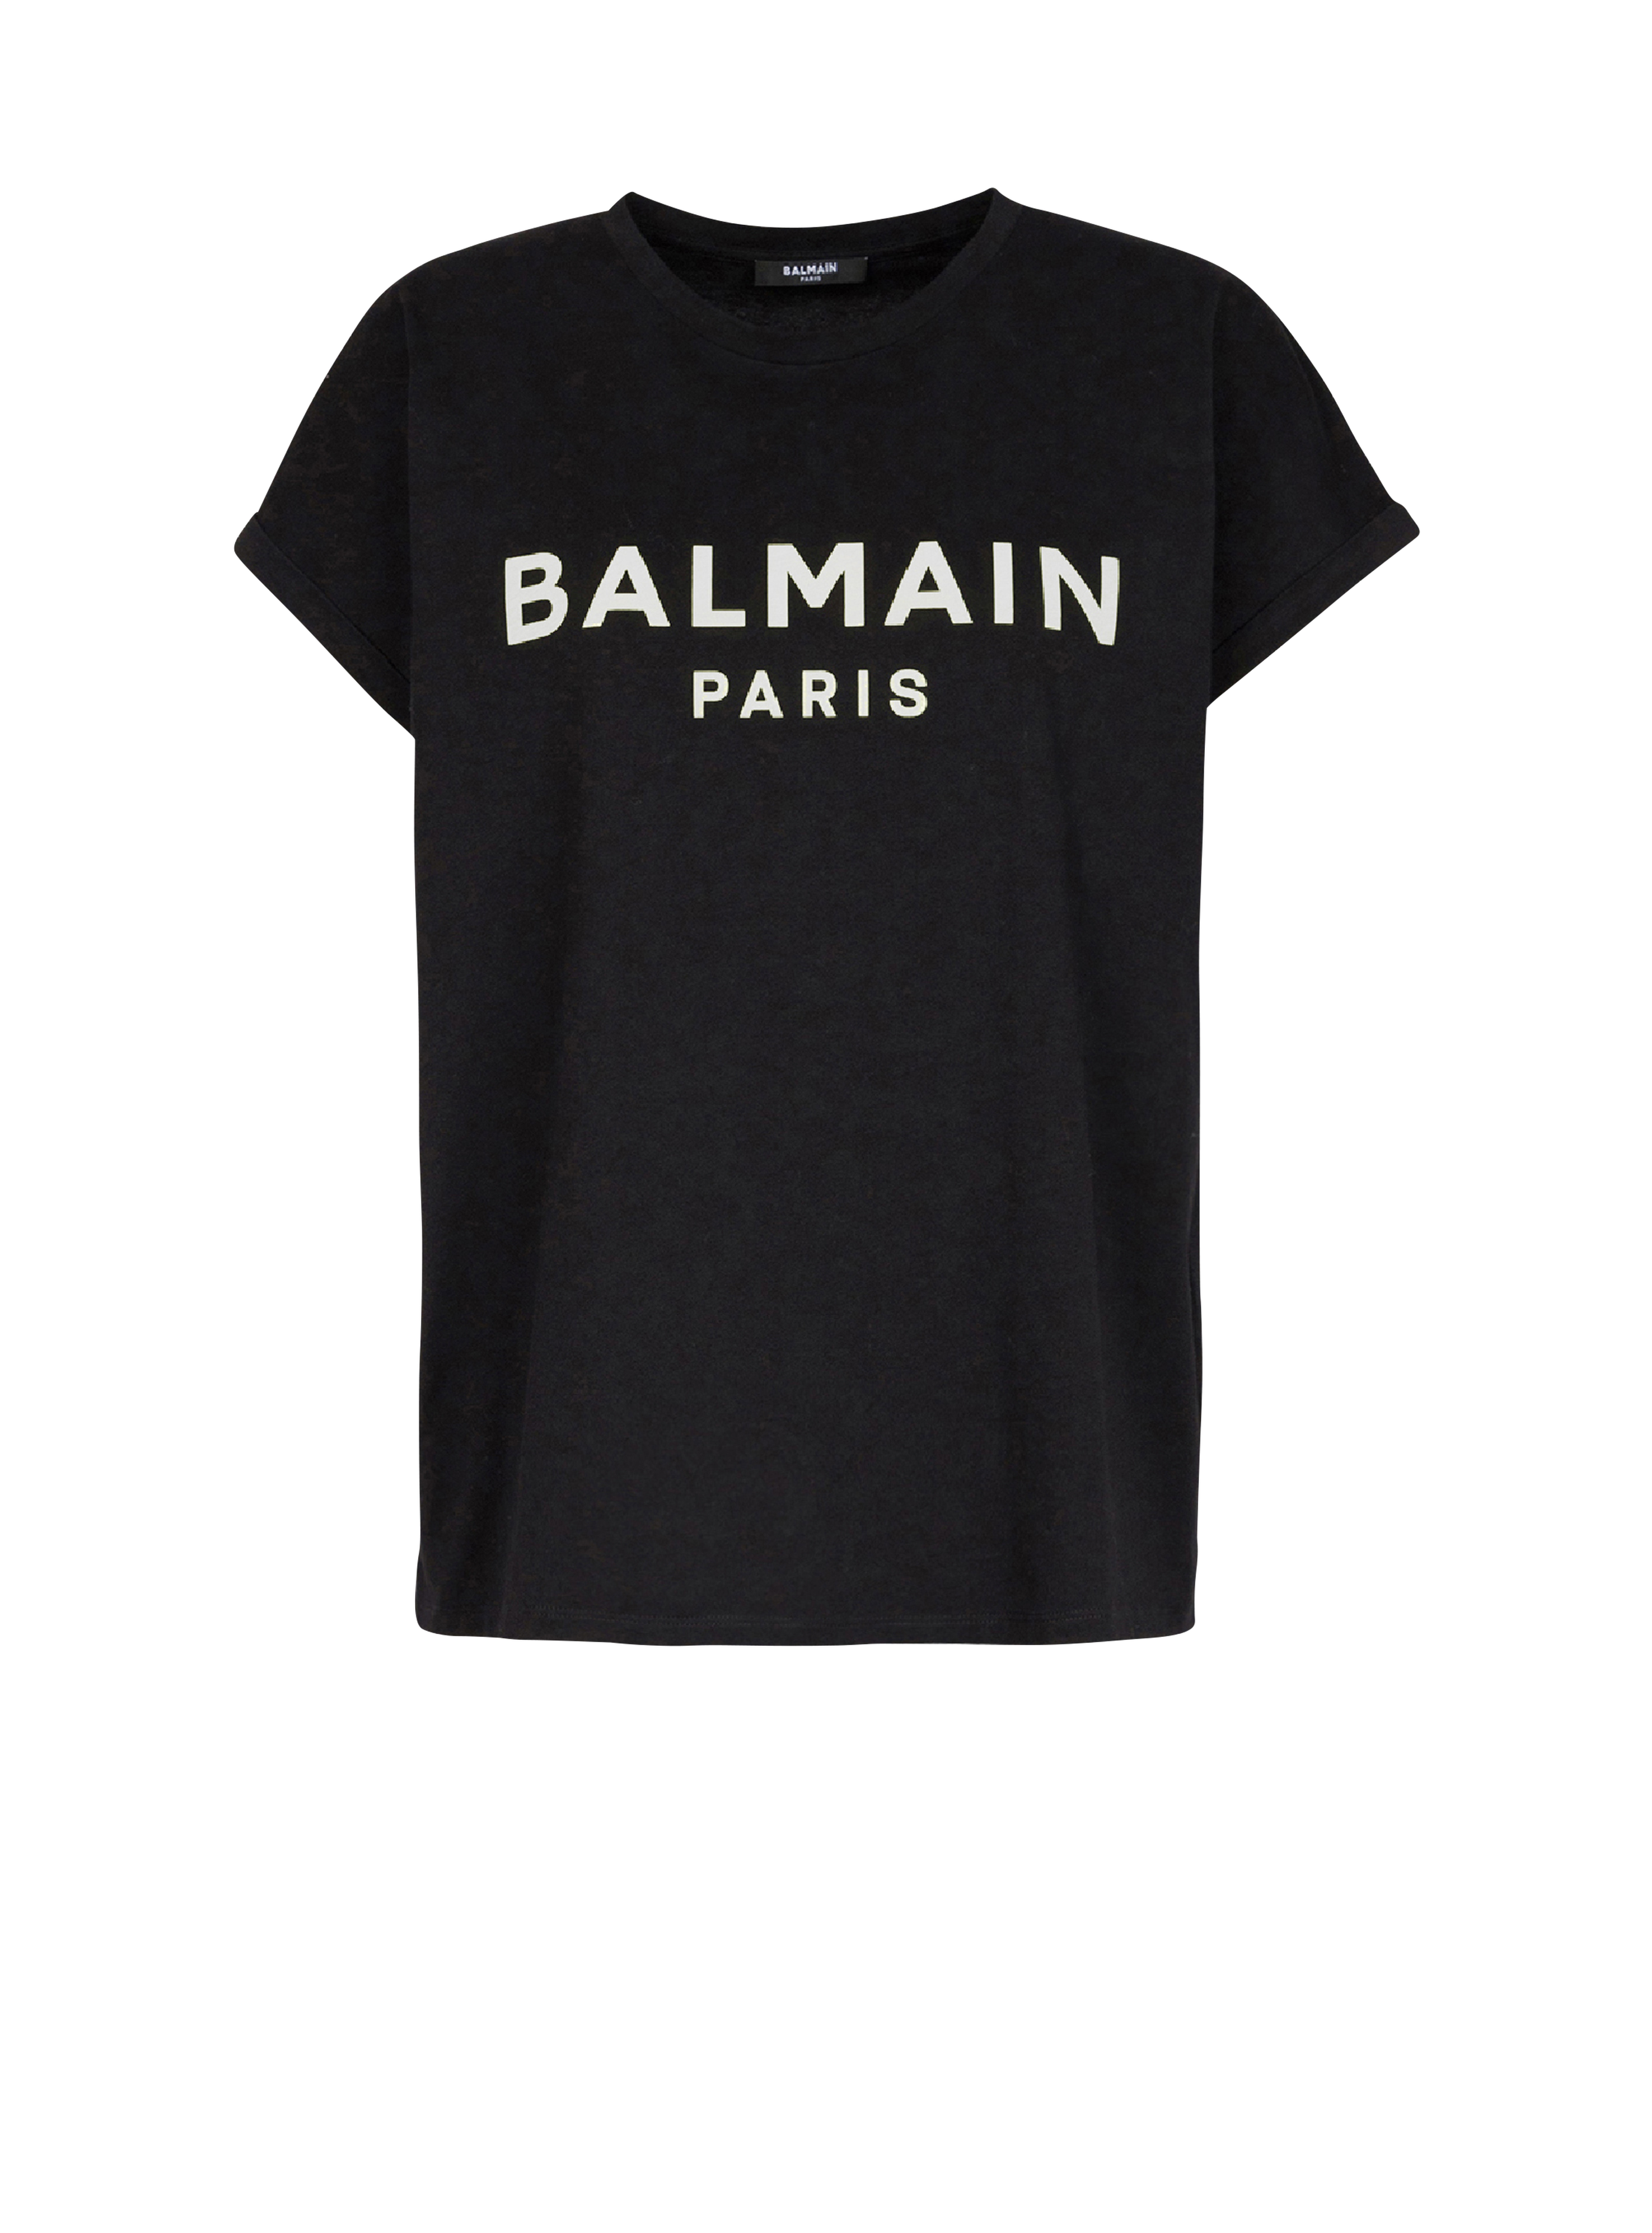 Eco-designed cotton T-shirt with Balmain logo print, black